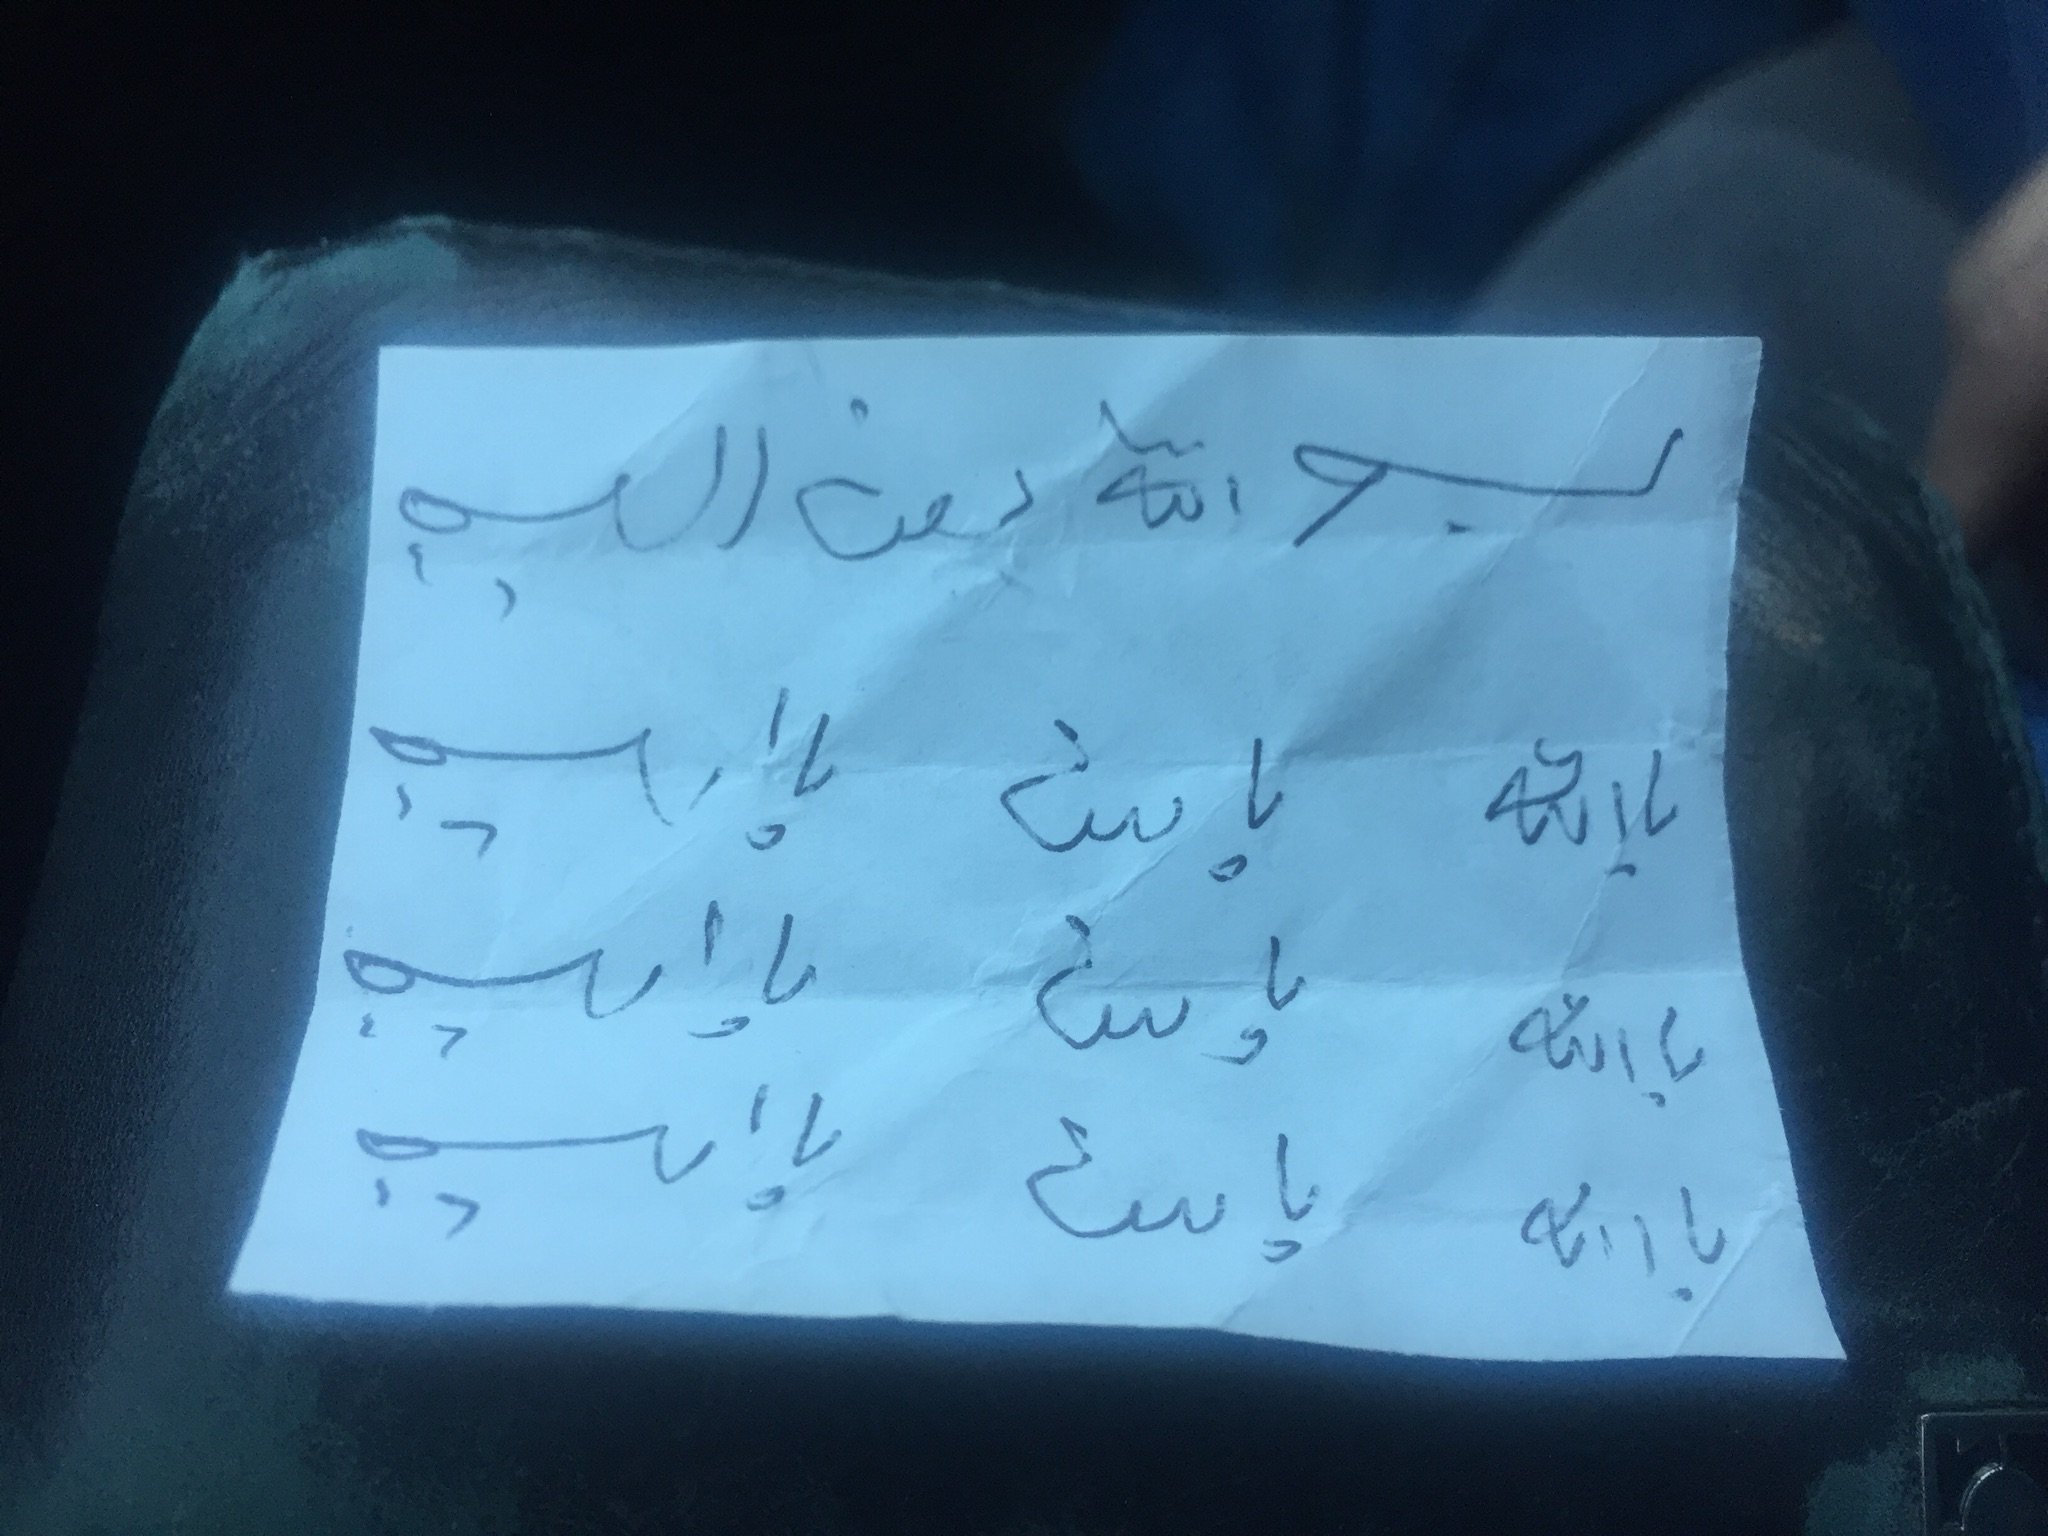 PmJXDXO 1 - Can somebody translate this? I think its Arabic or Pakistani